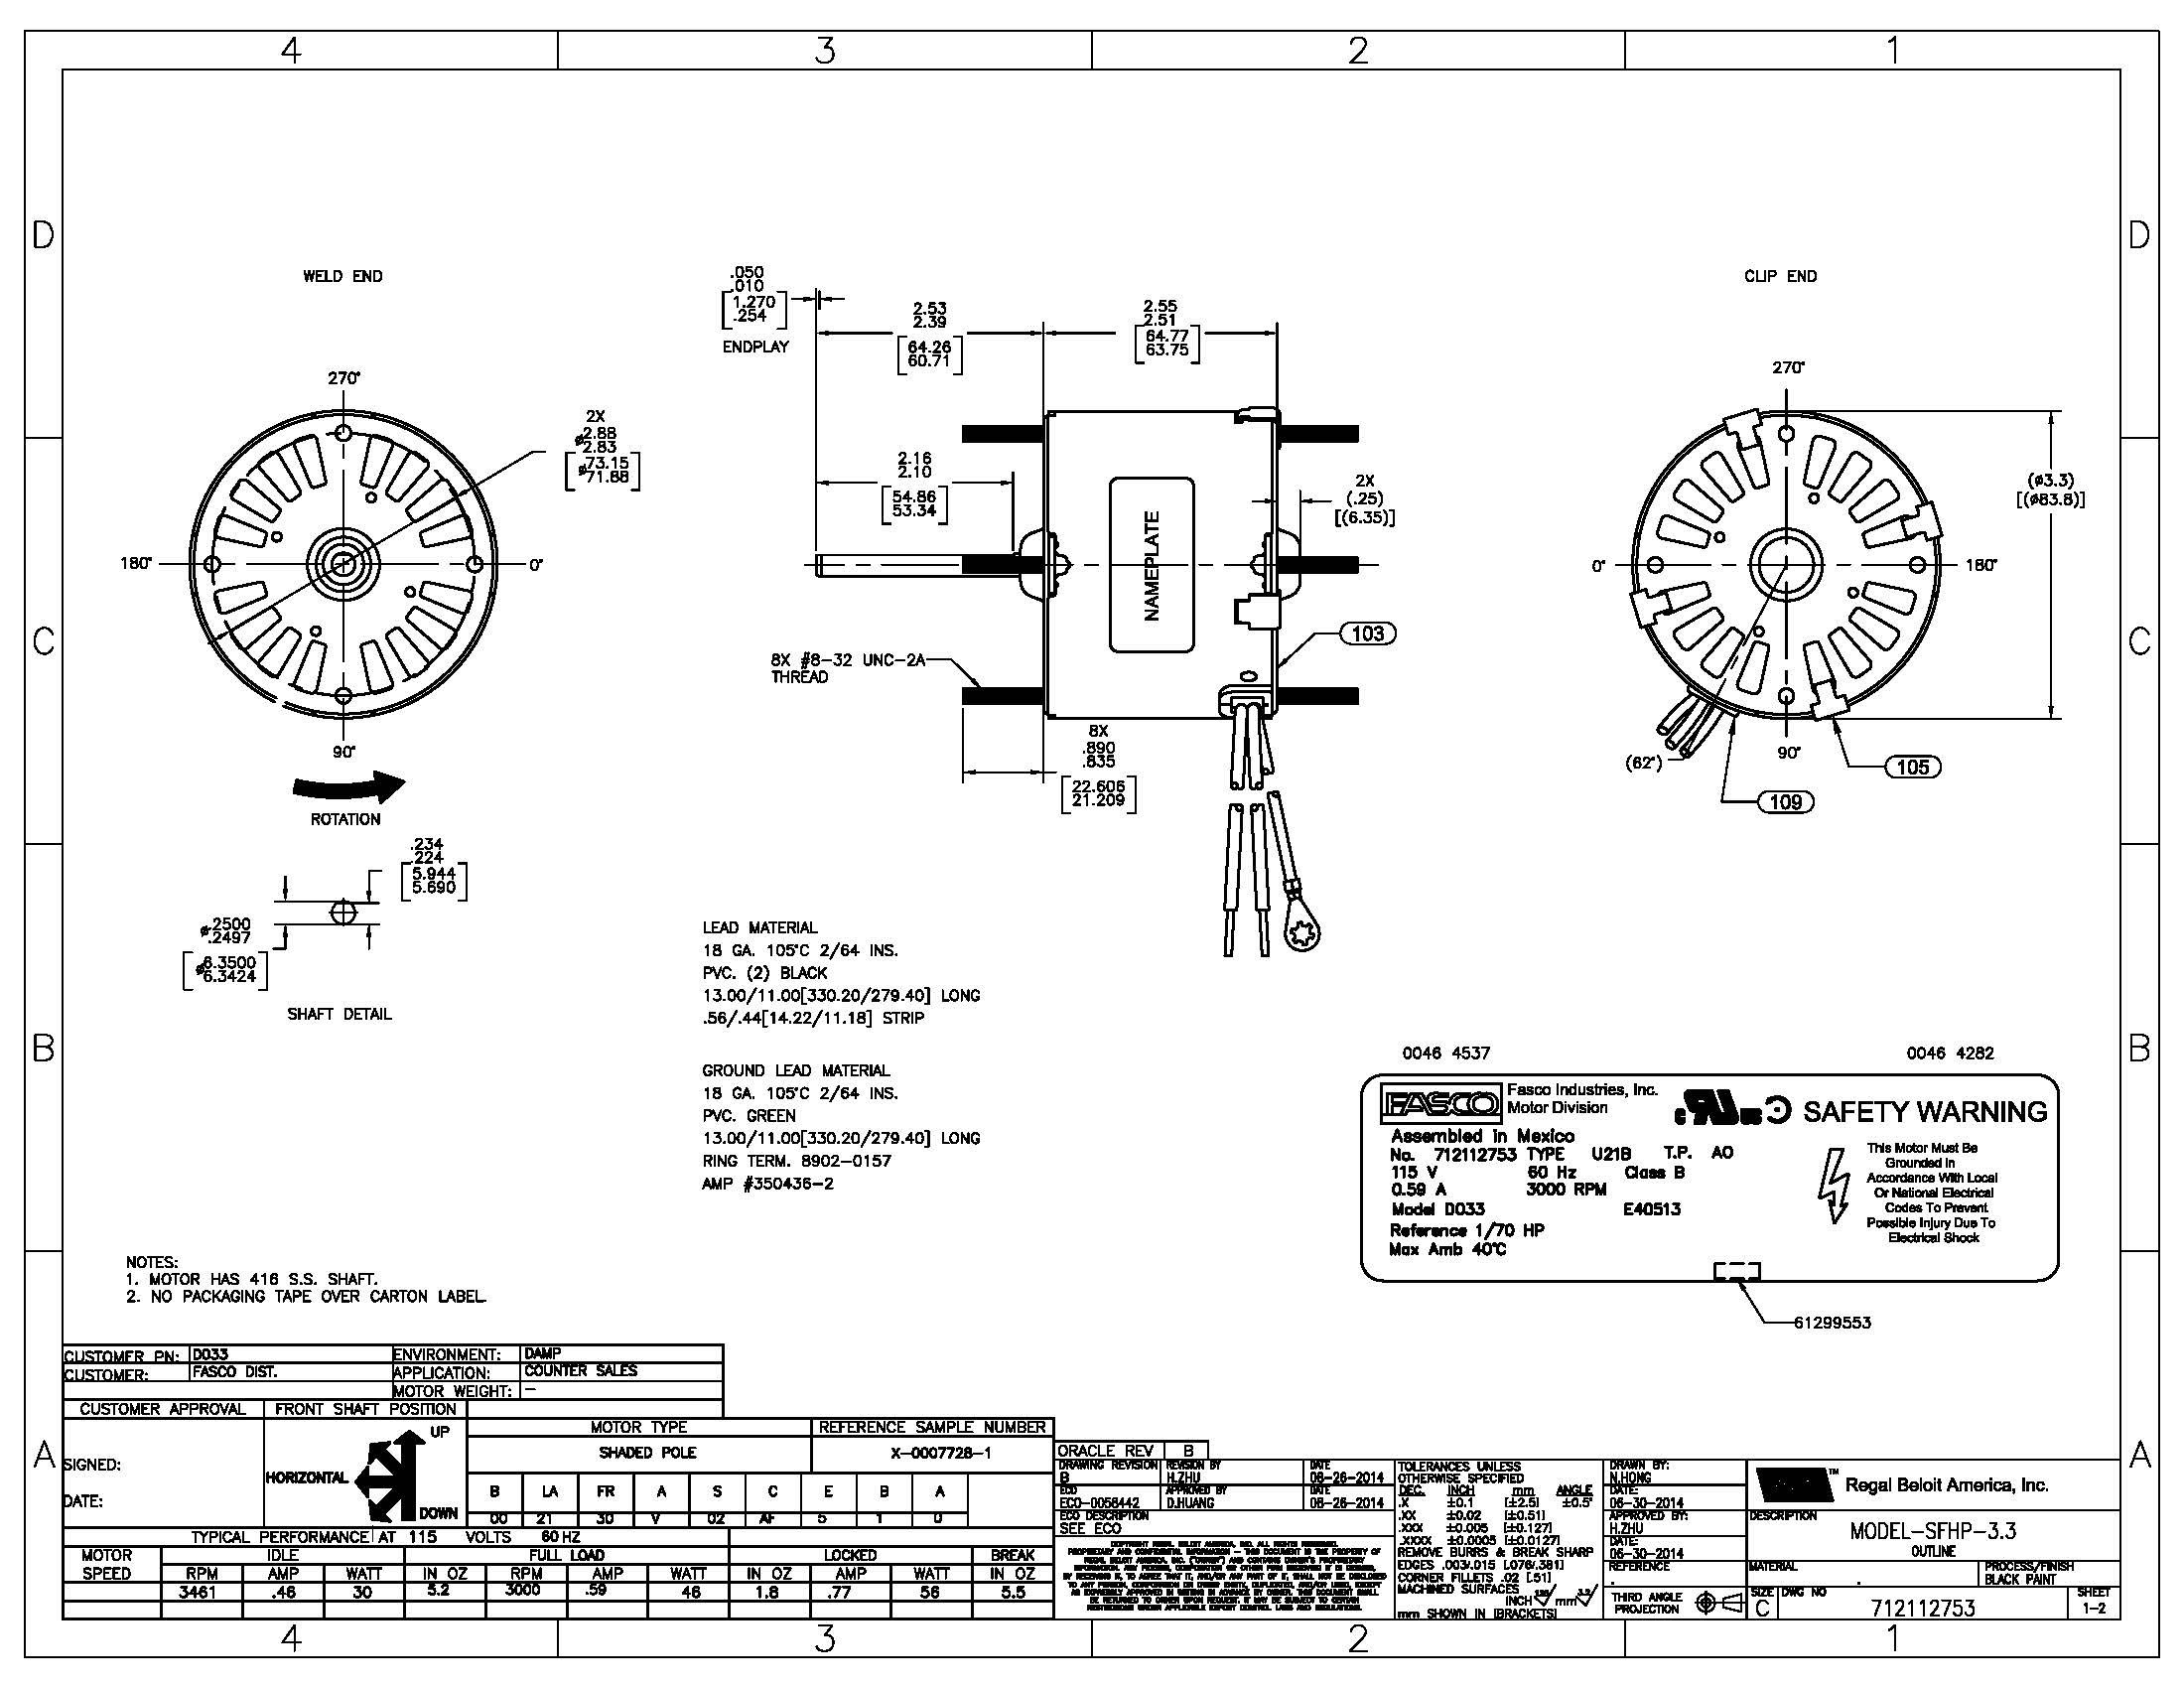 Ac fan motor capacitor wiring diagram